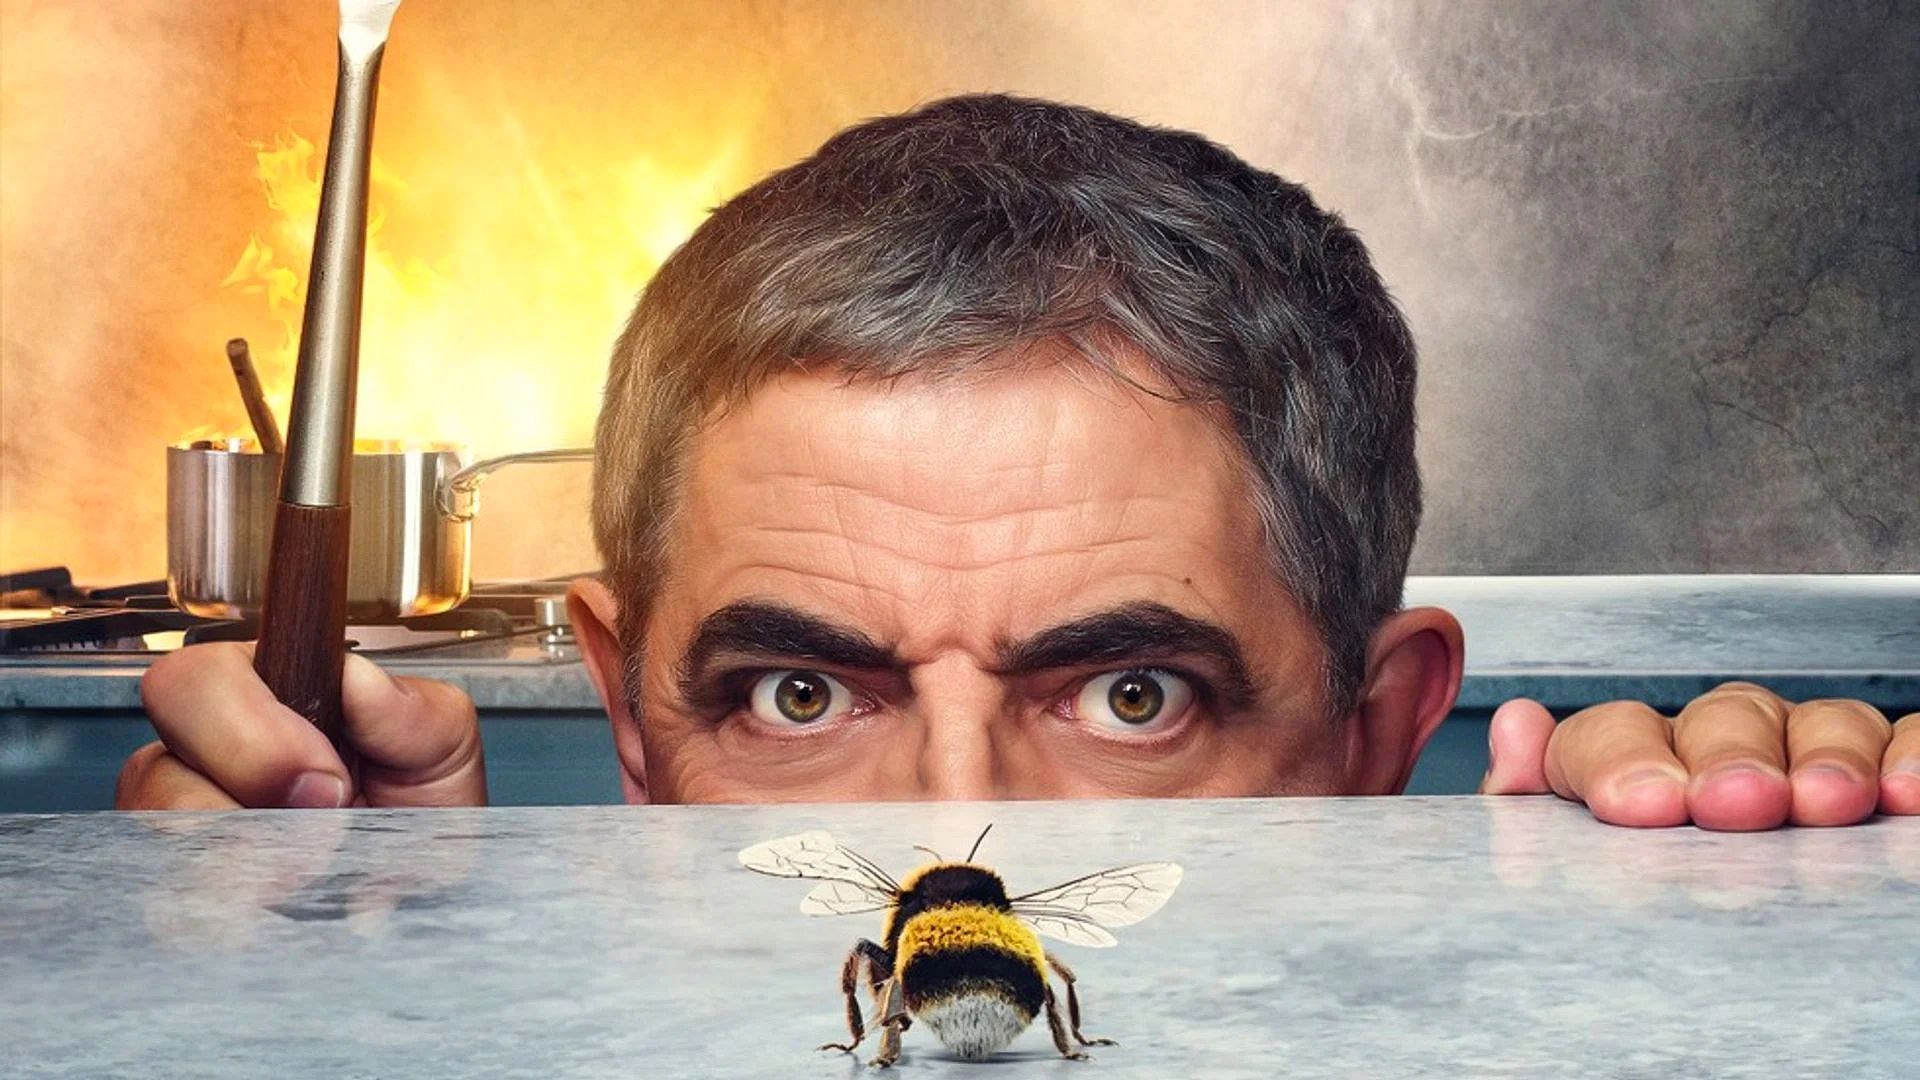 Man vs. Bee background